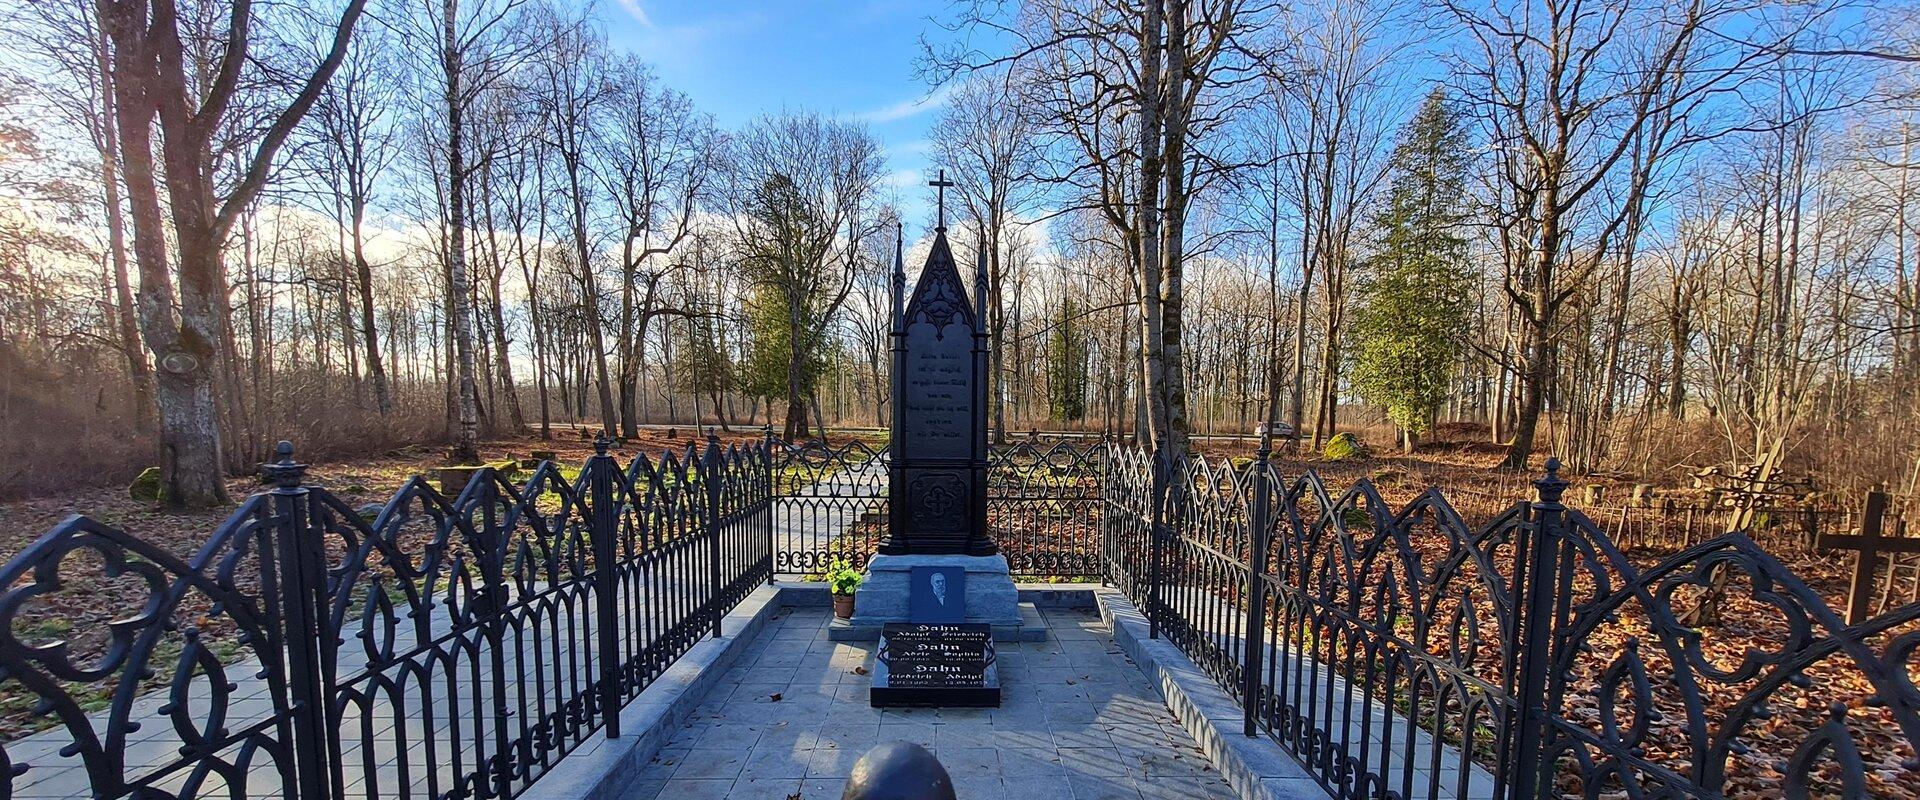 Adolf Hahn's burial place